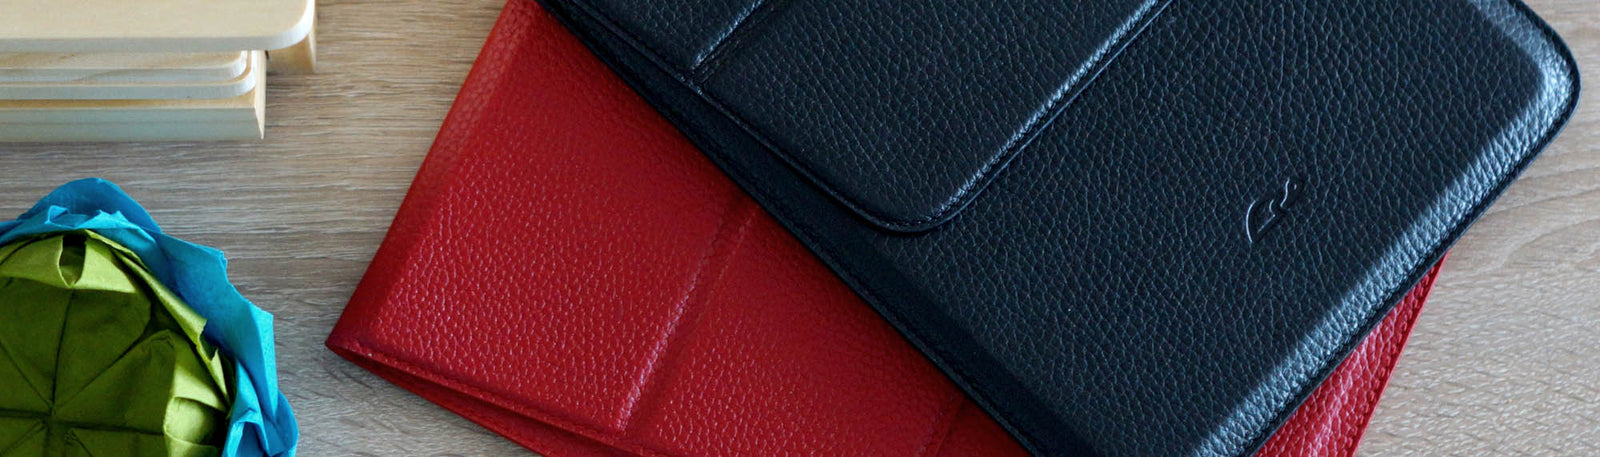 iPad Mini 7.9'' Leather Case - Grained Leather - Carapaz